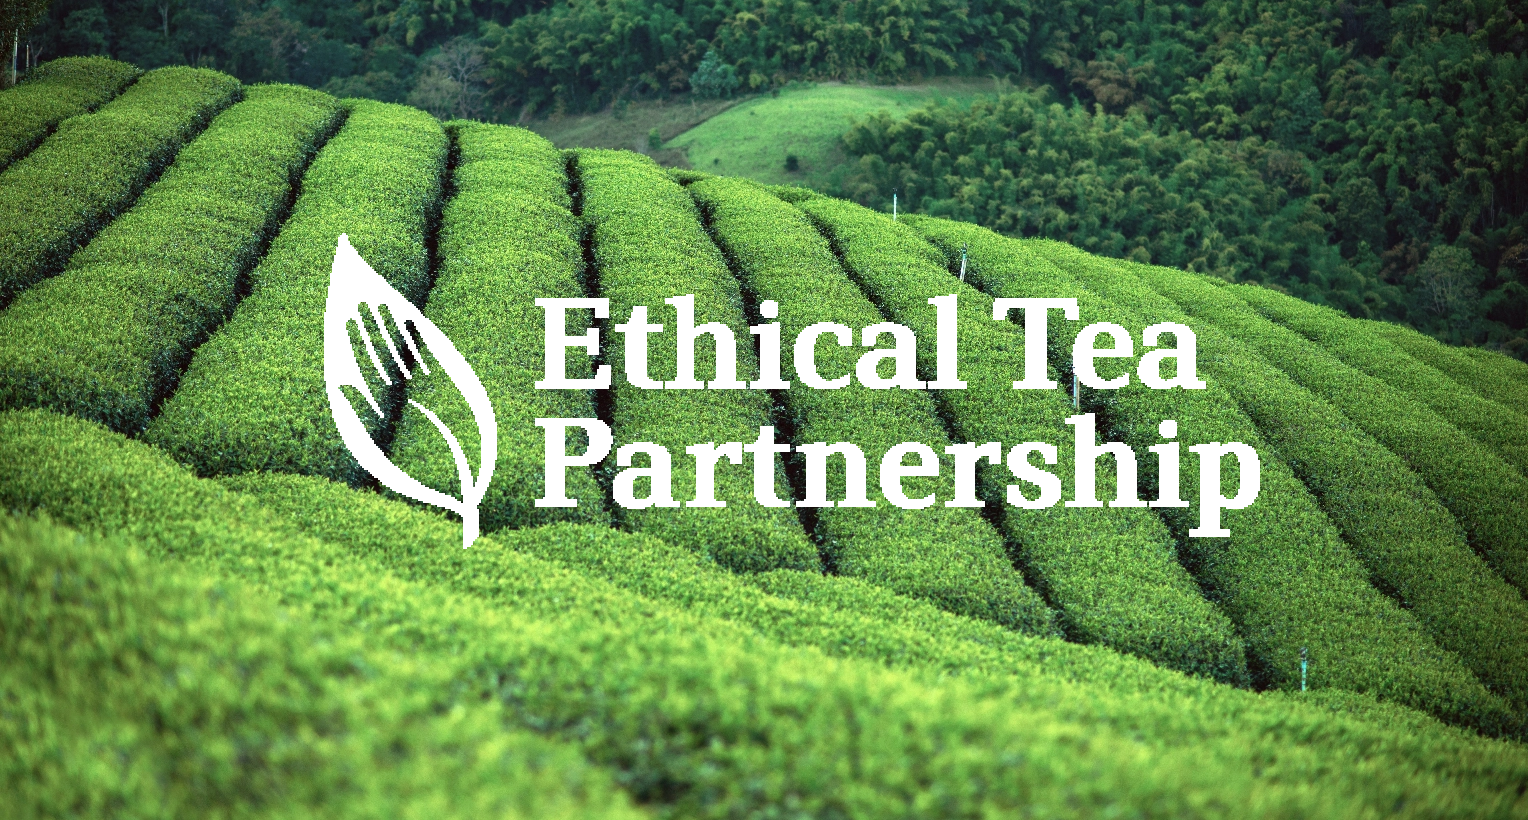 Ethical Tea Partnership